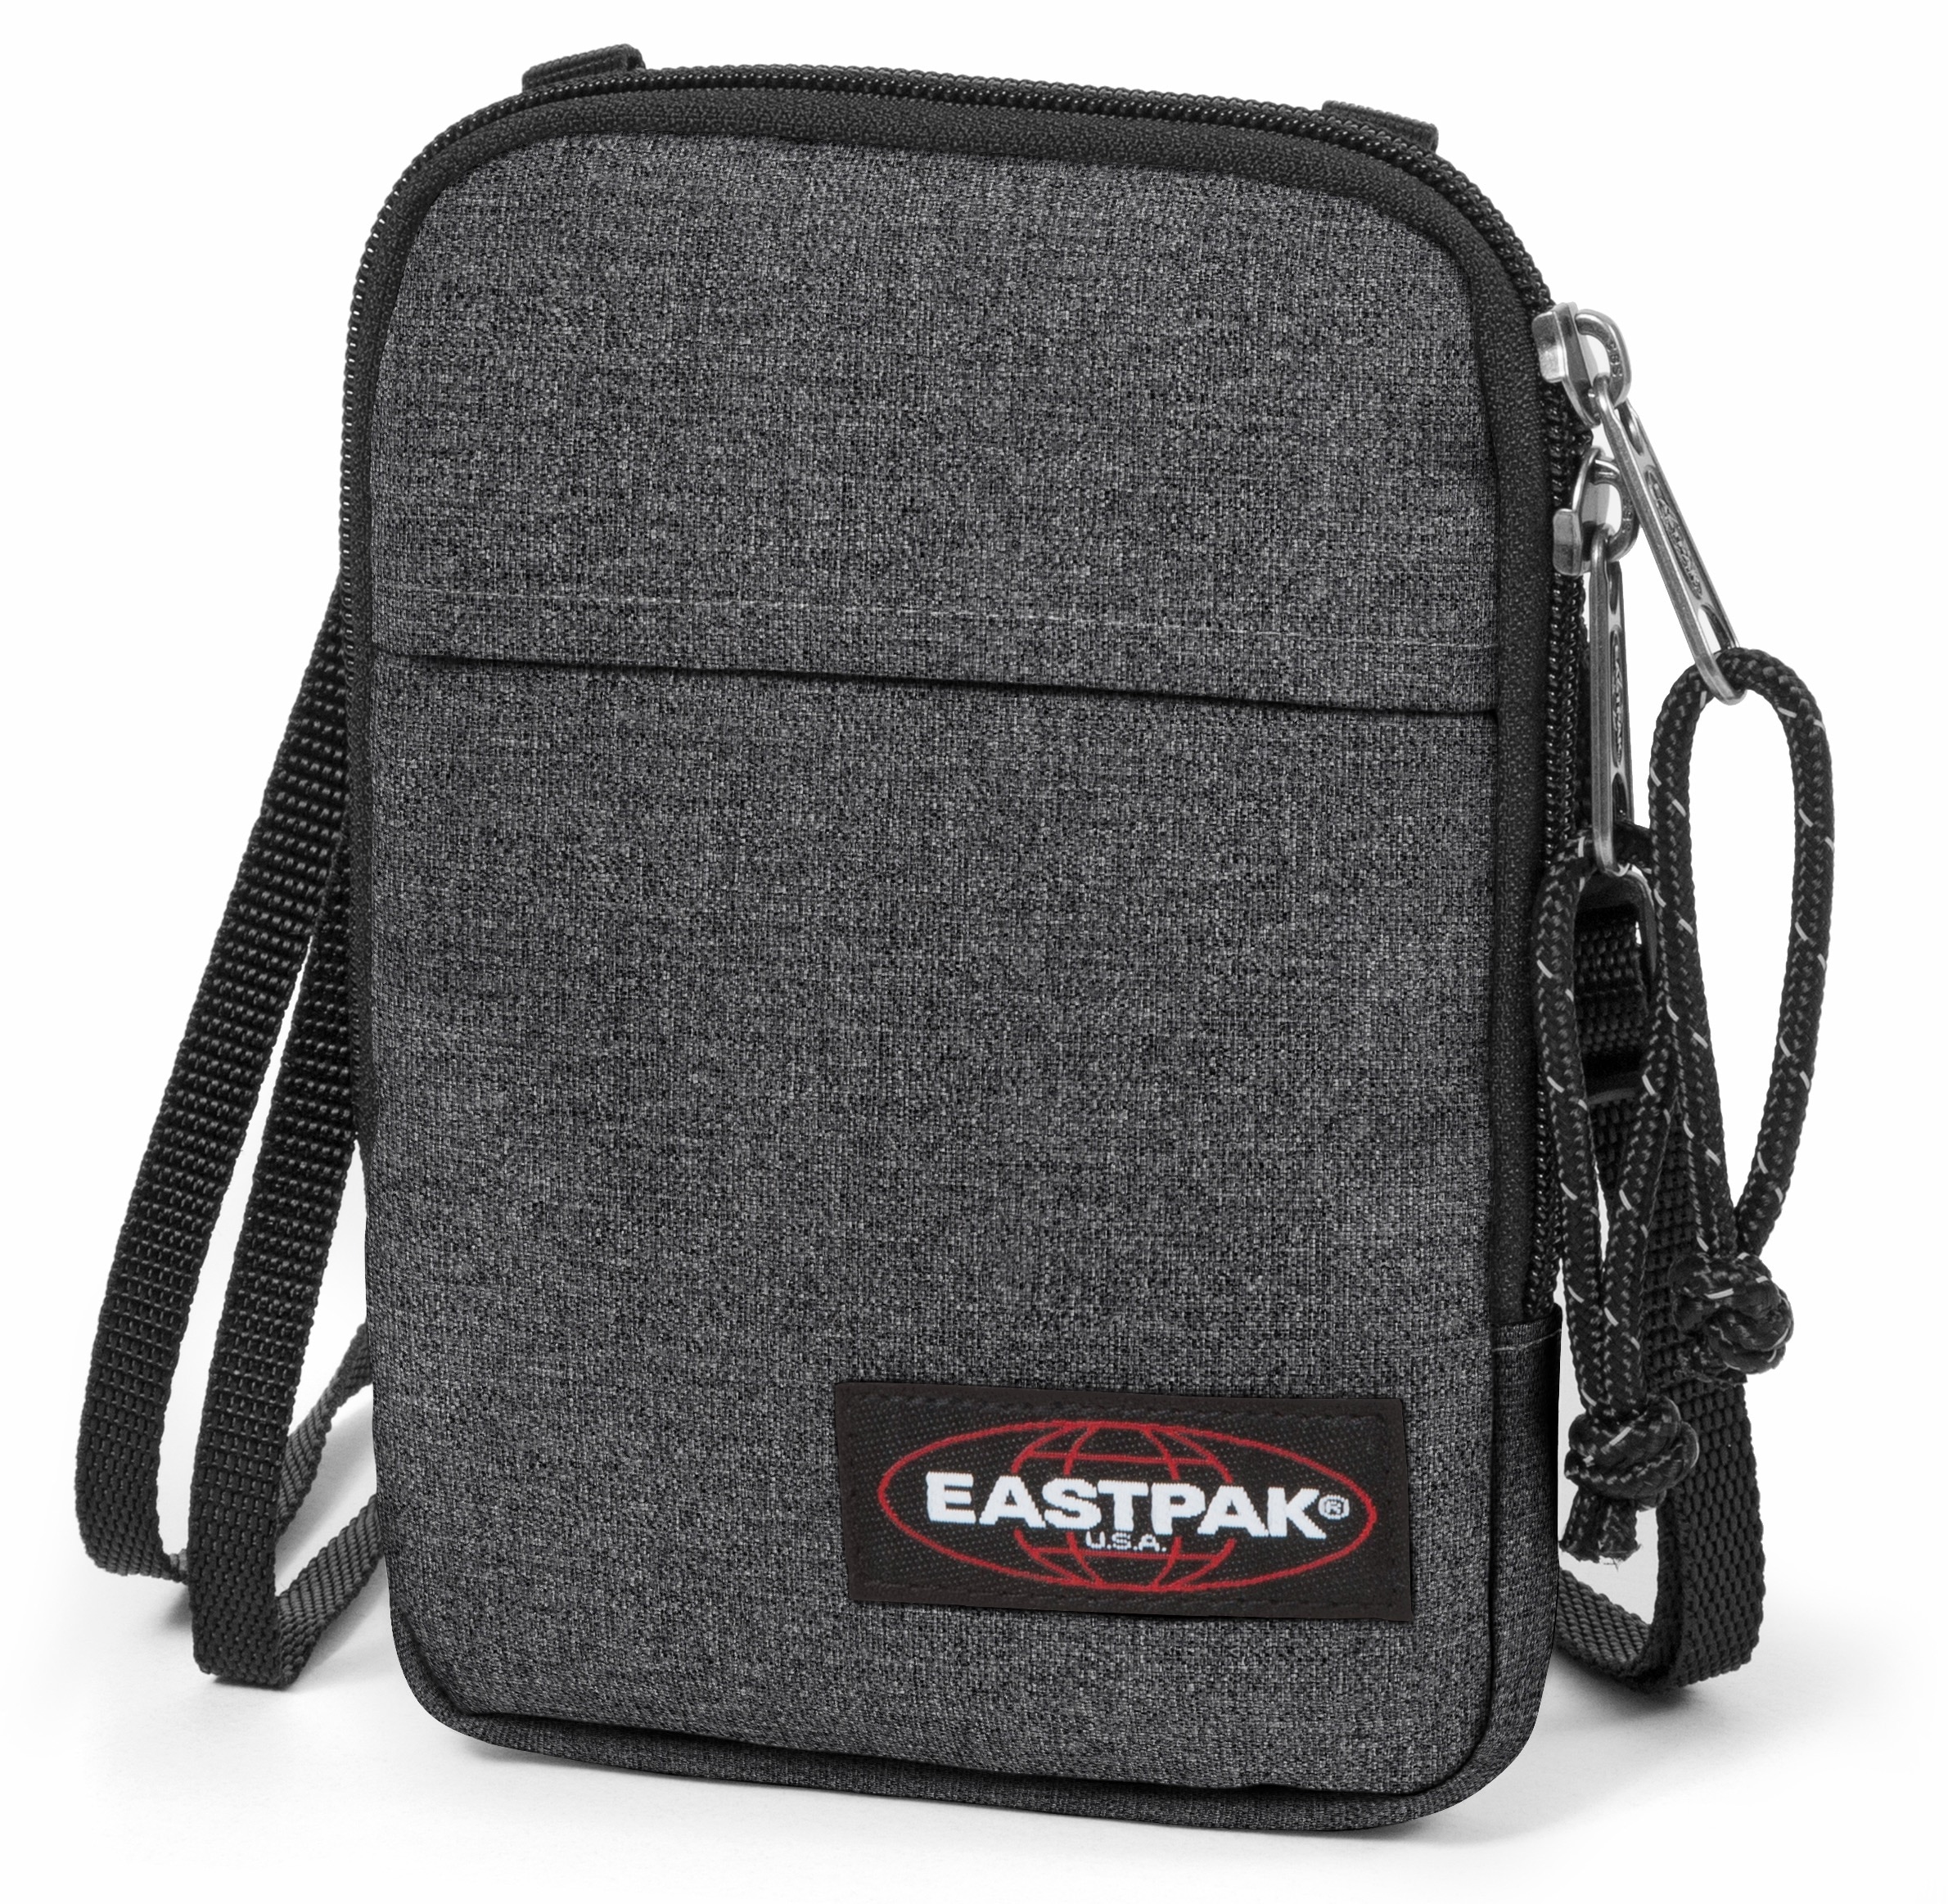 Eastpak Mini Bag "BUDDY"